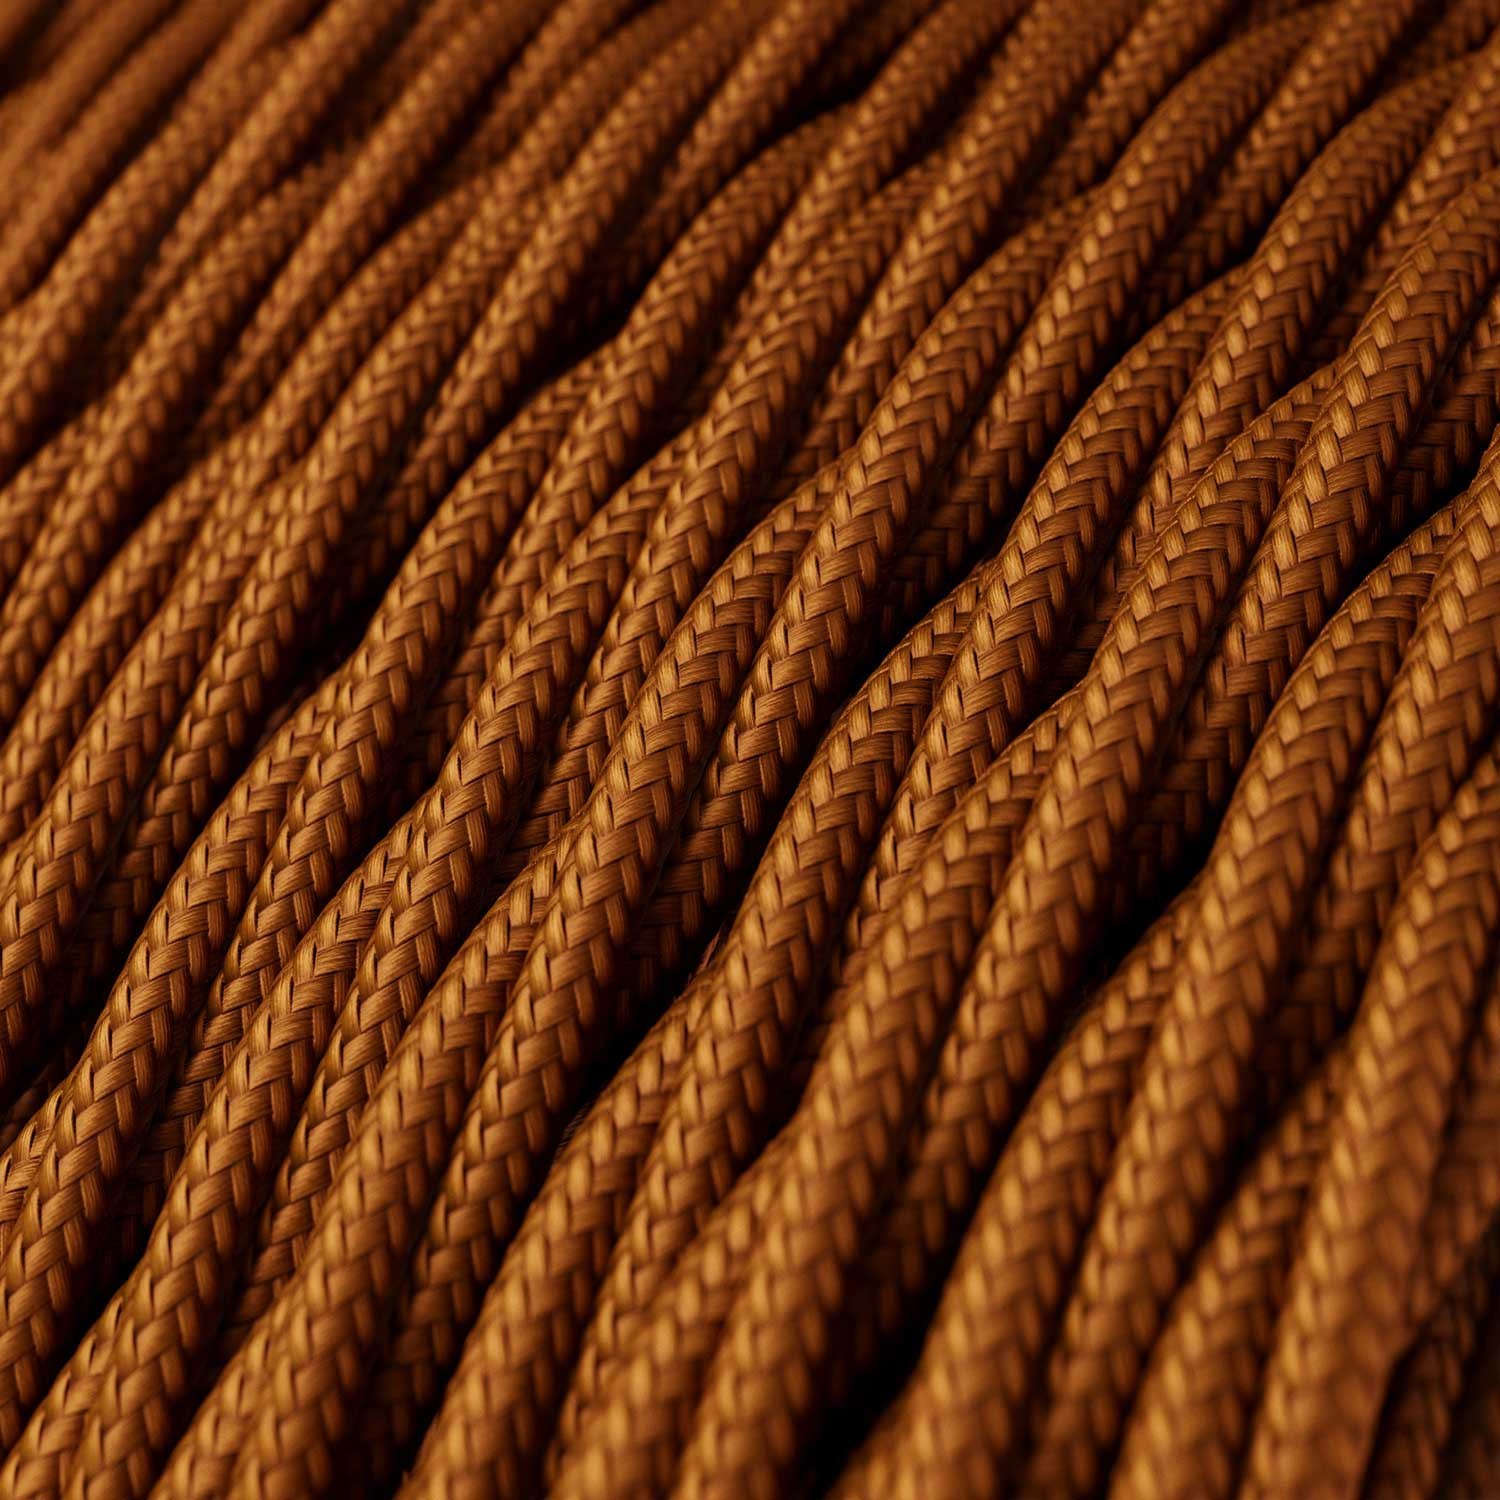 Zamotan tekstilni električni kabel TM22, Whiskey, svilenkast izgled